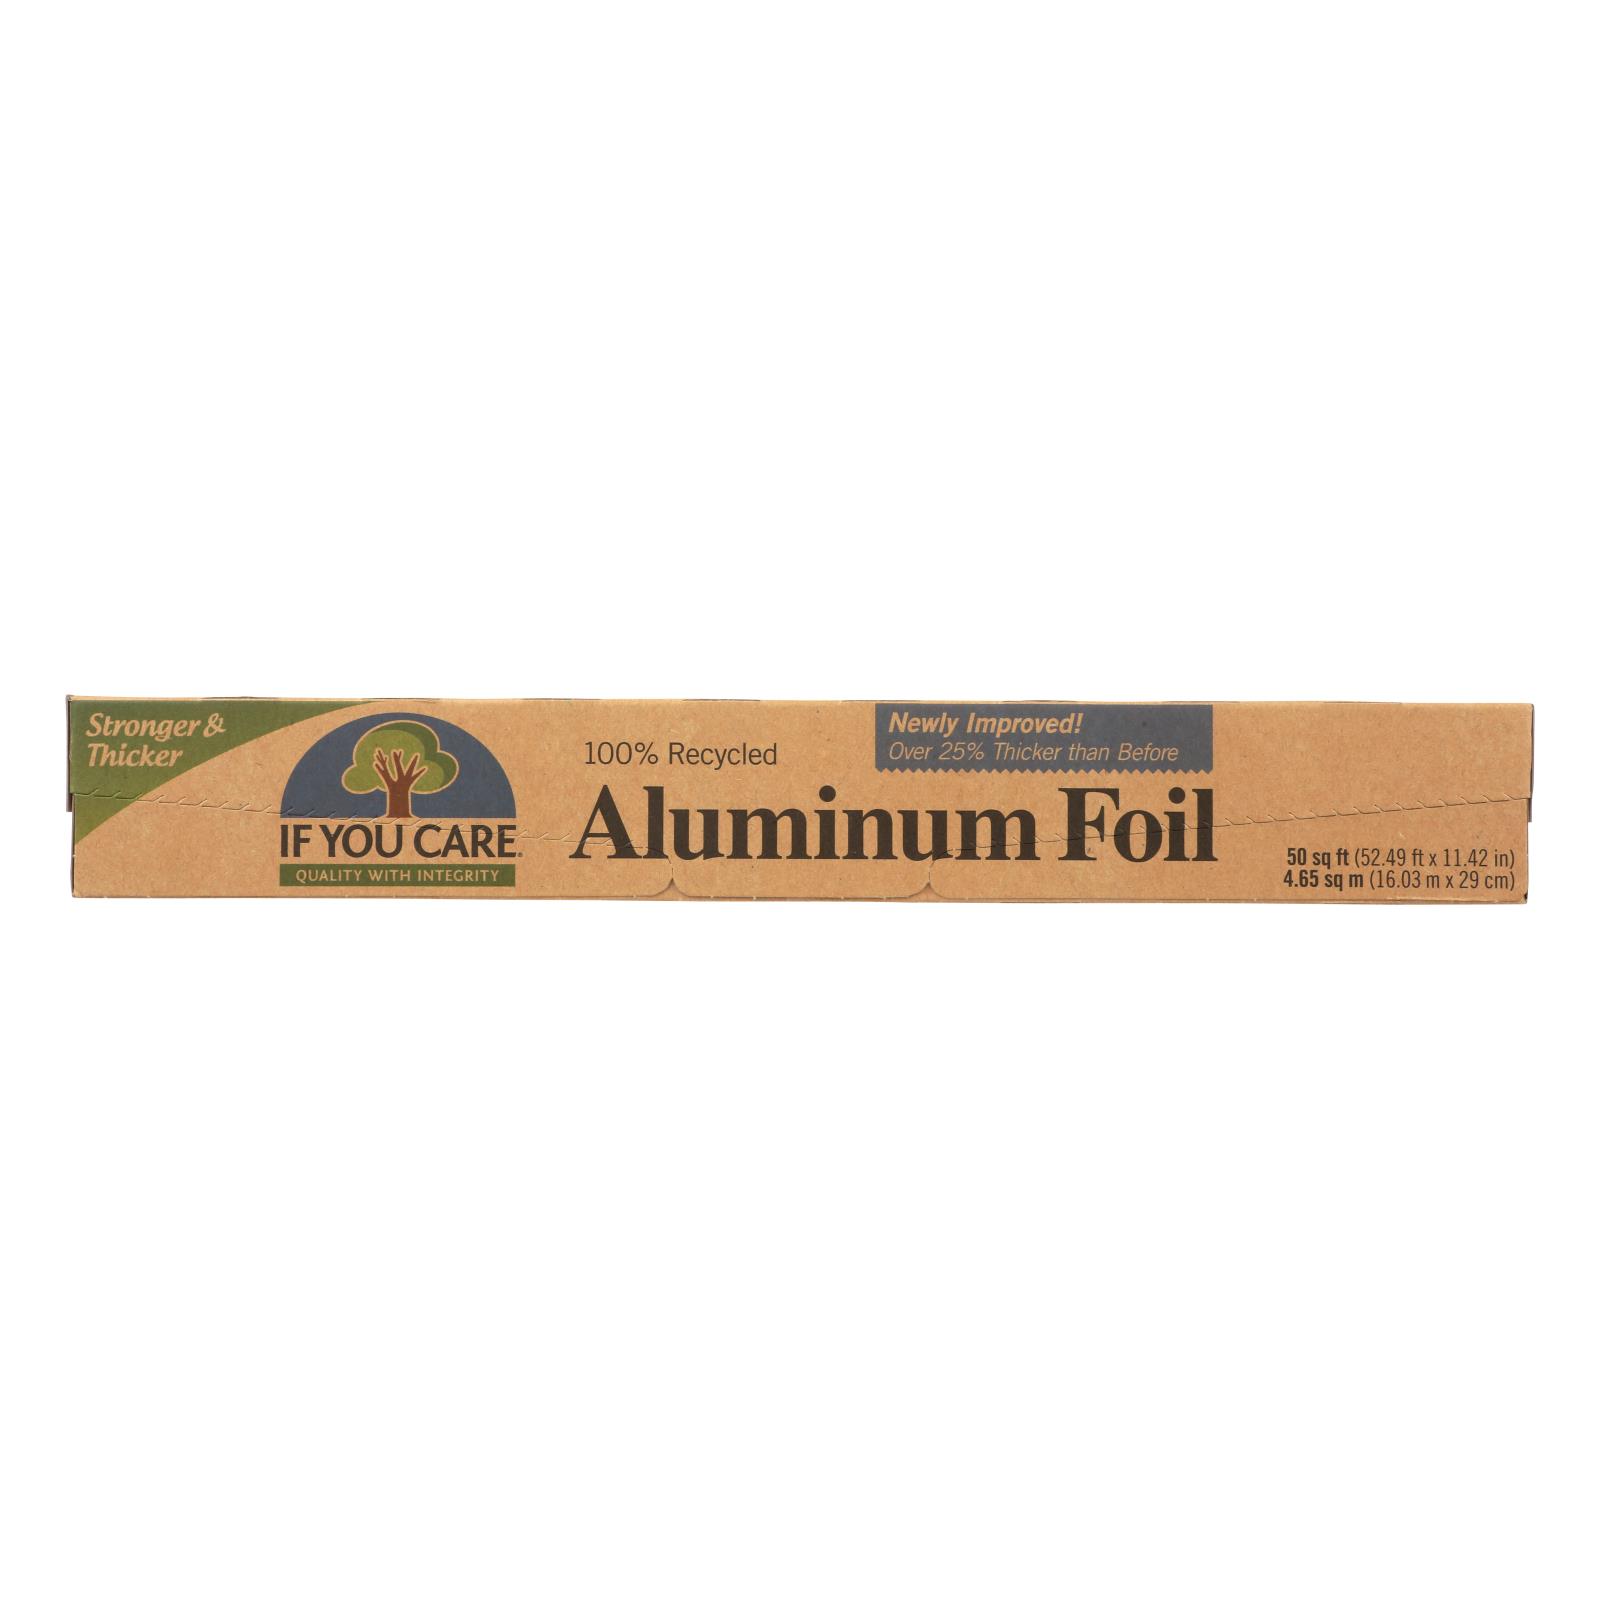 If You Care Aluminum Foil - 1 Each - 50 SQ FT